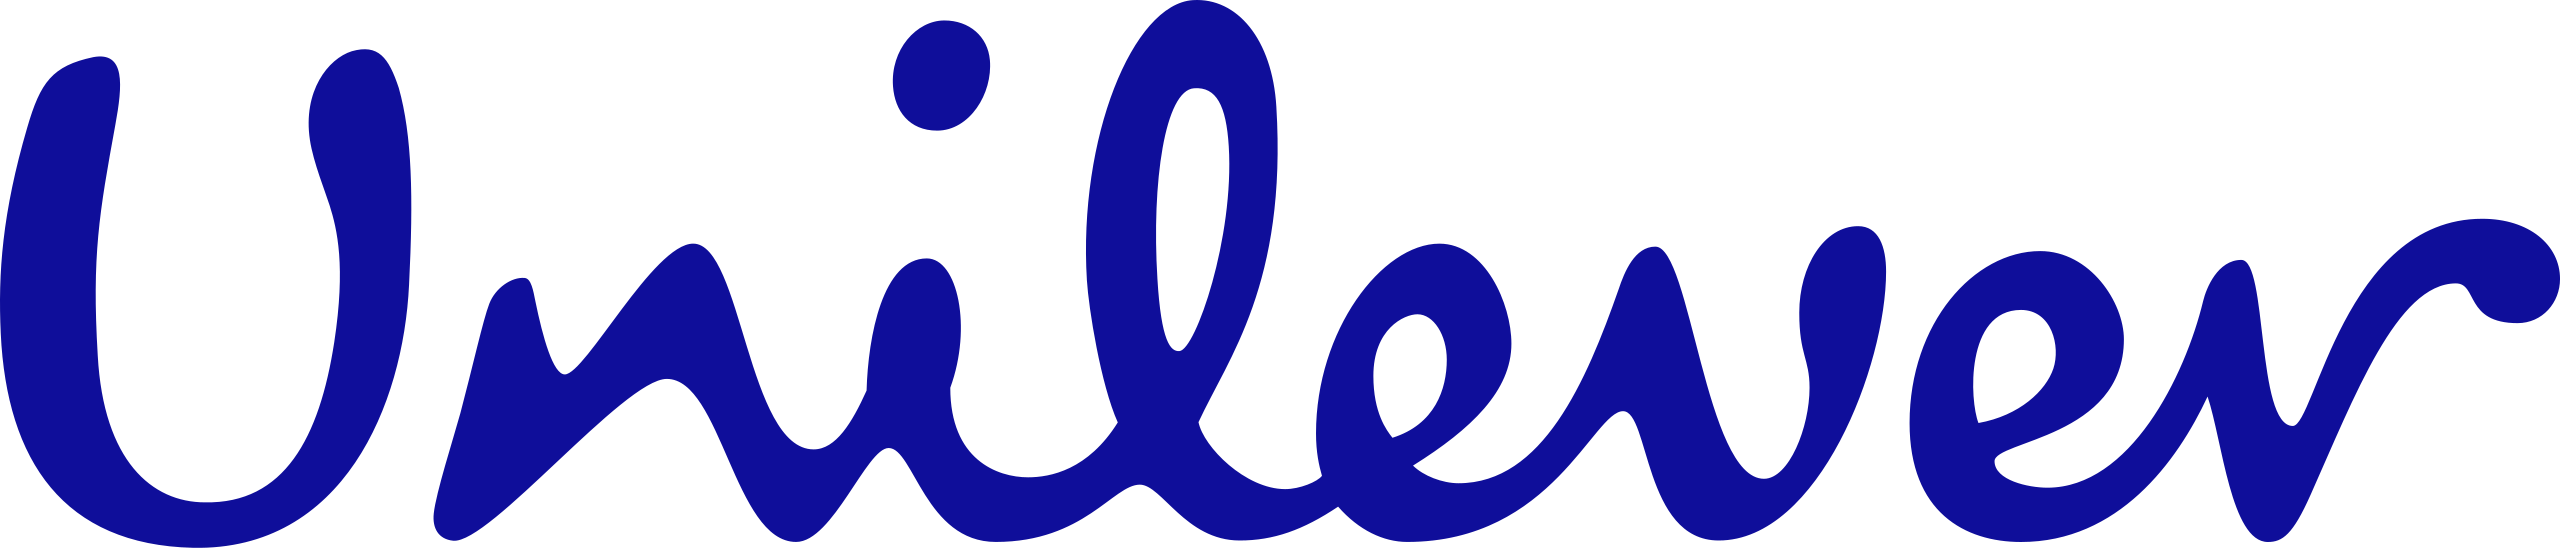 2560px-Unilever_text_logo.svg